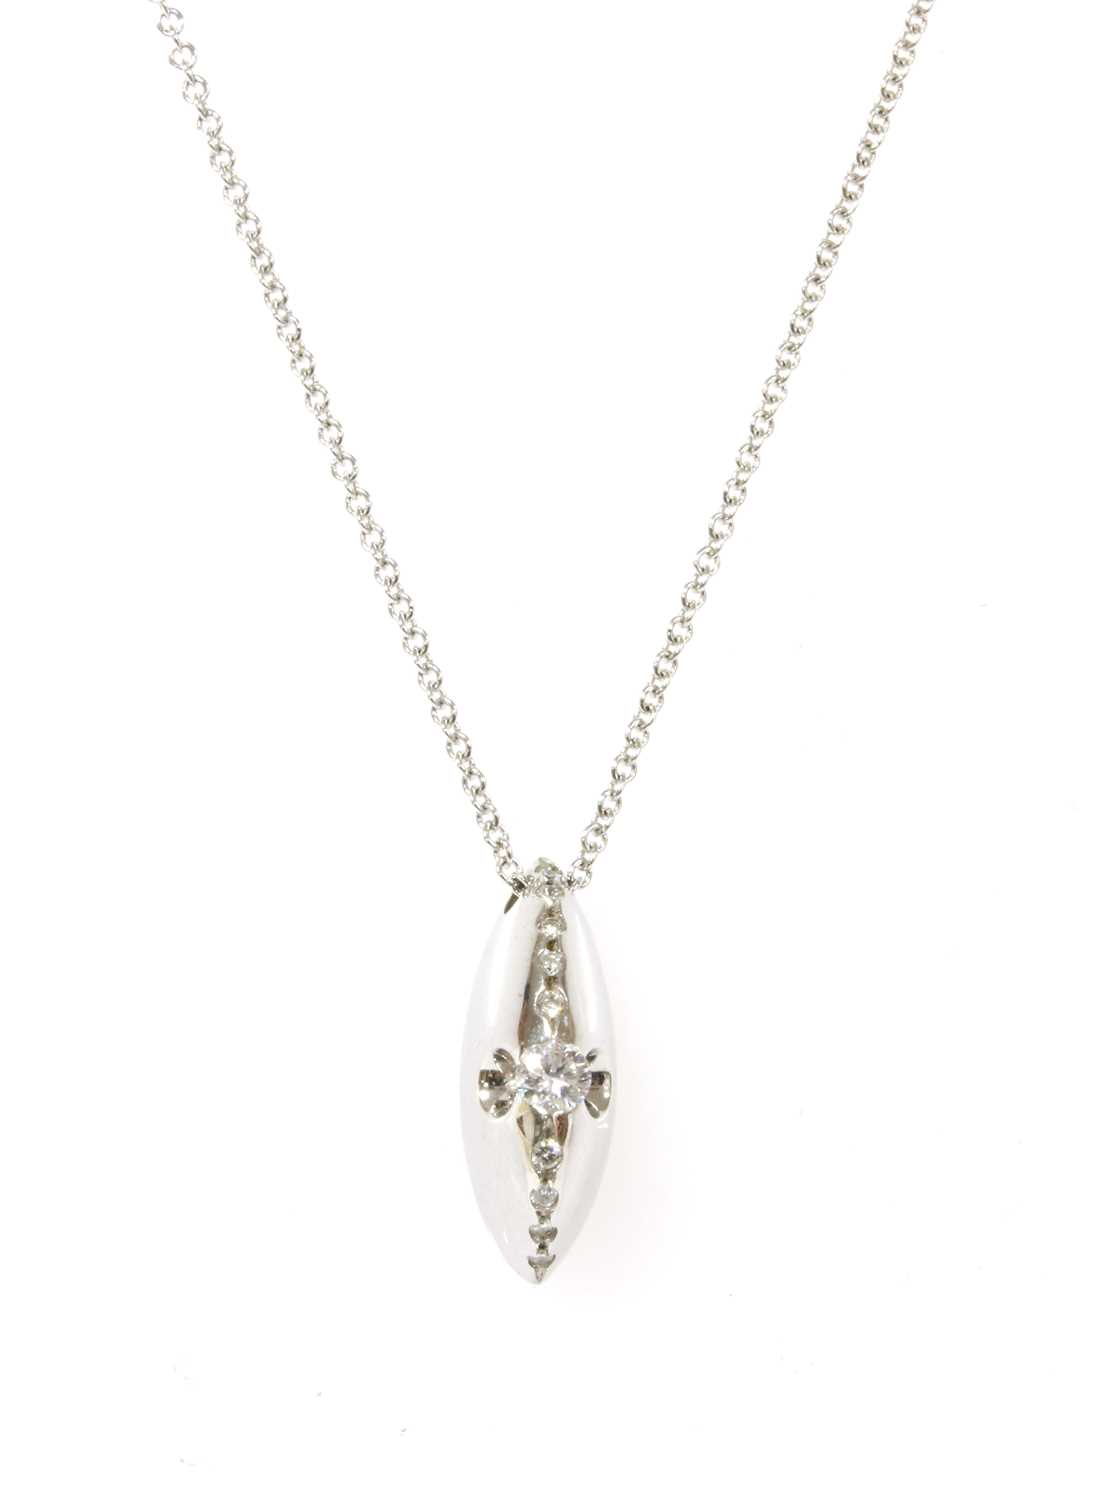 Lot 92 - An 18ct white gold diamond pendant